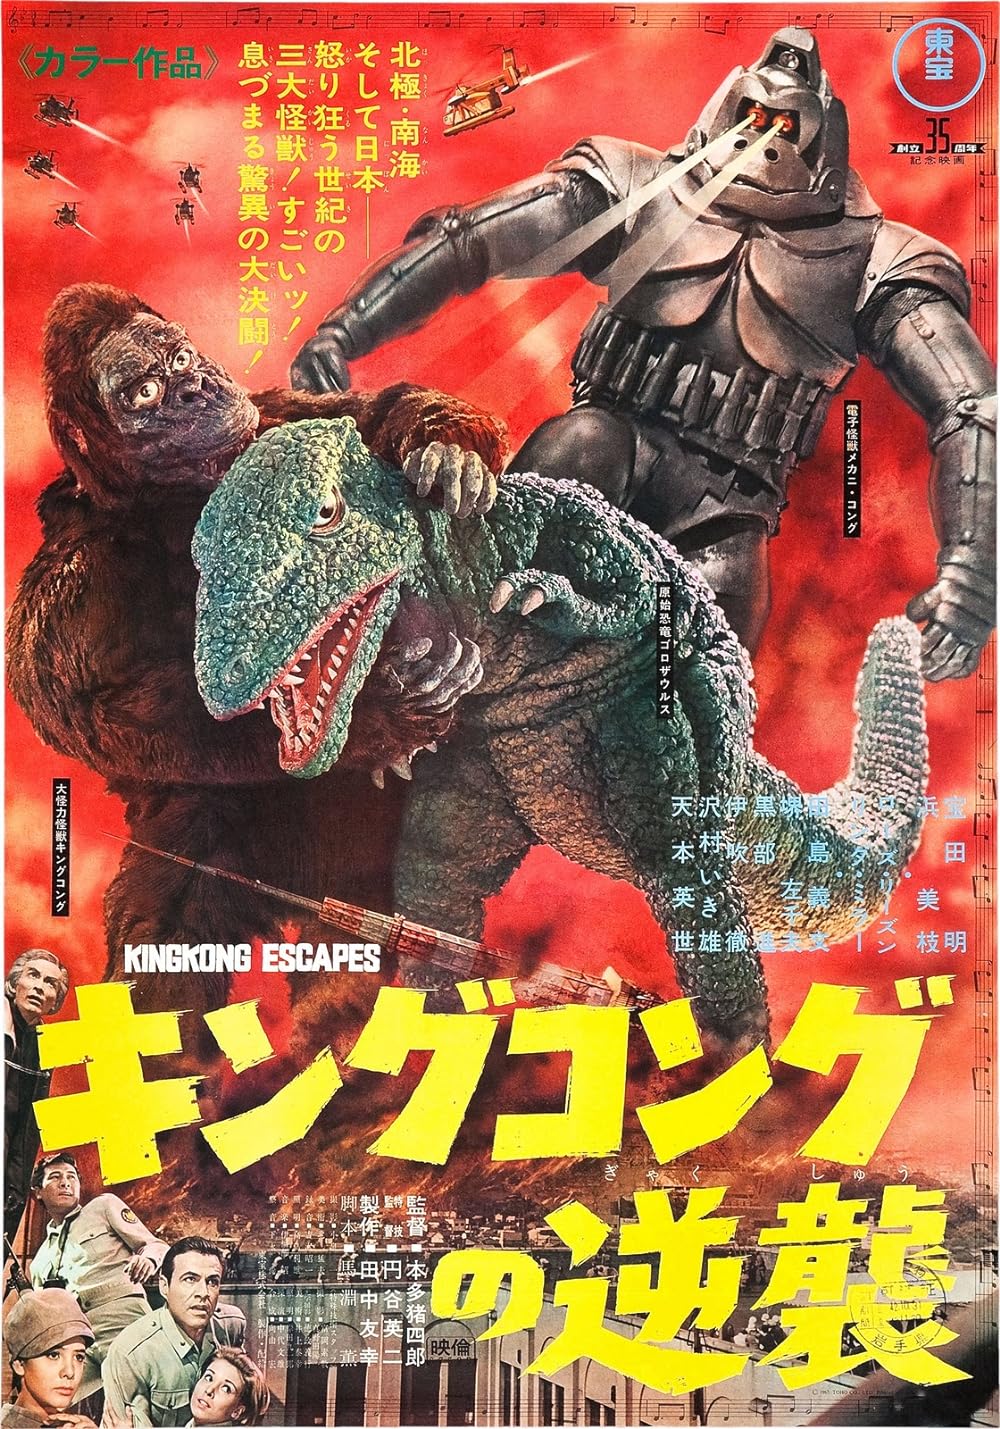 King Kong Escapes ( Kingu Kongu no gyakushû )